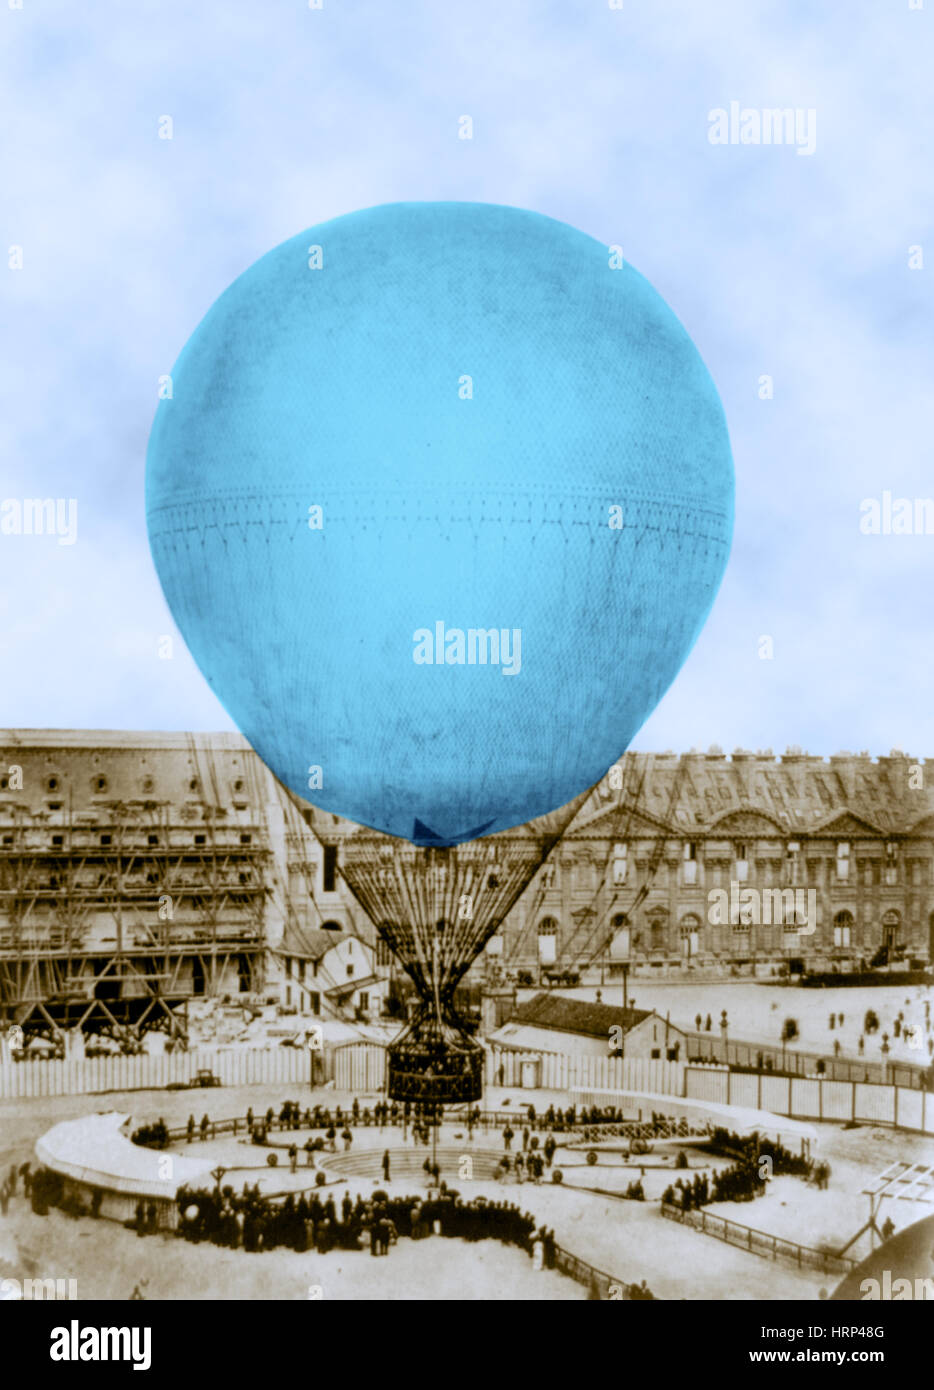 Henri Giffard, ballon captif du 1878 Banque D'Images